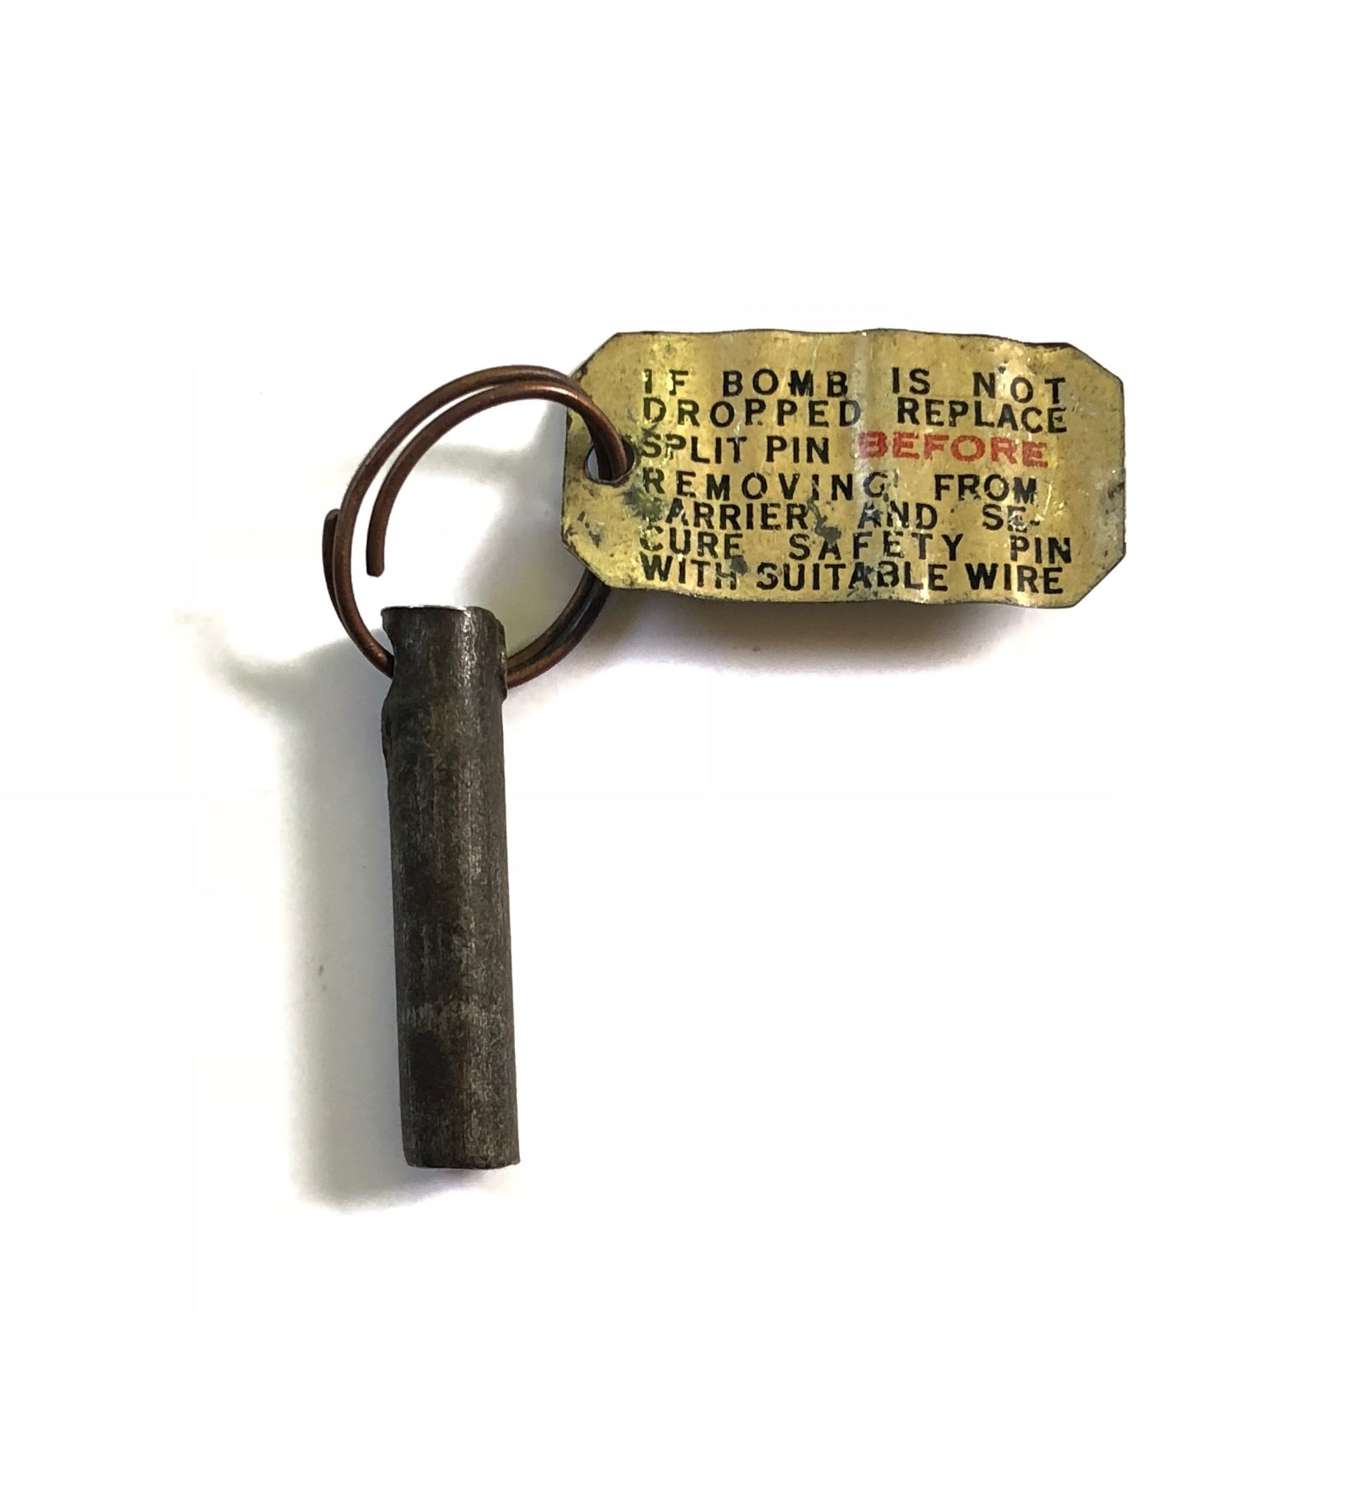 WW2 RAF Bomb Split Pin Key.